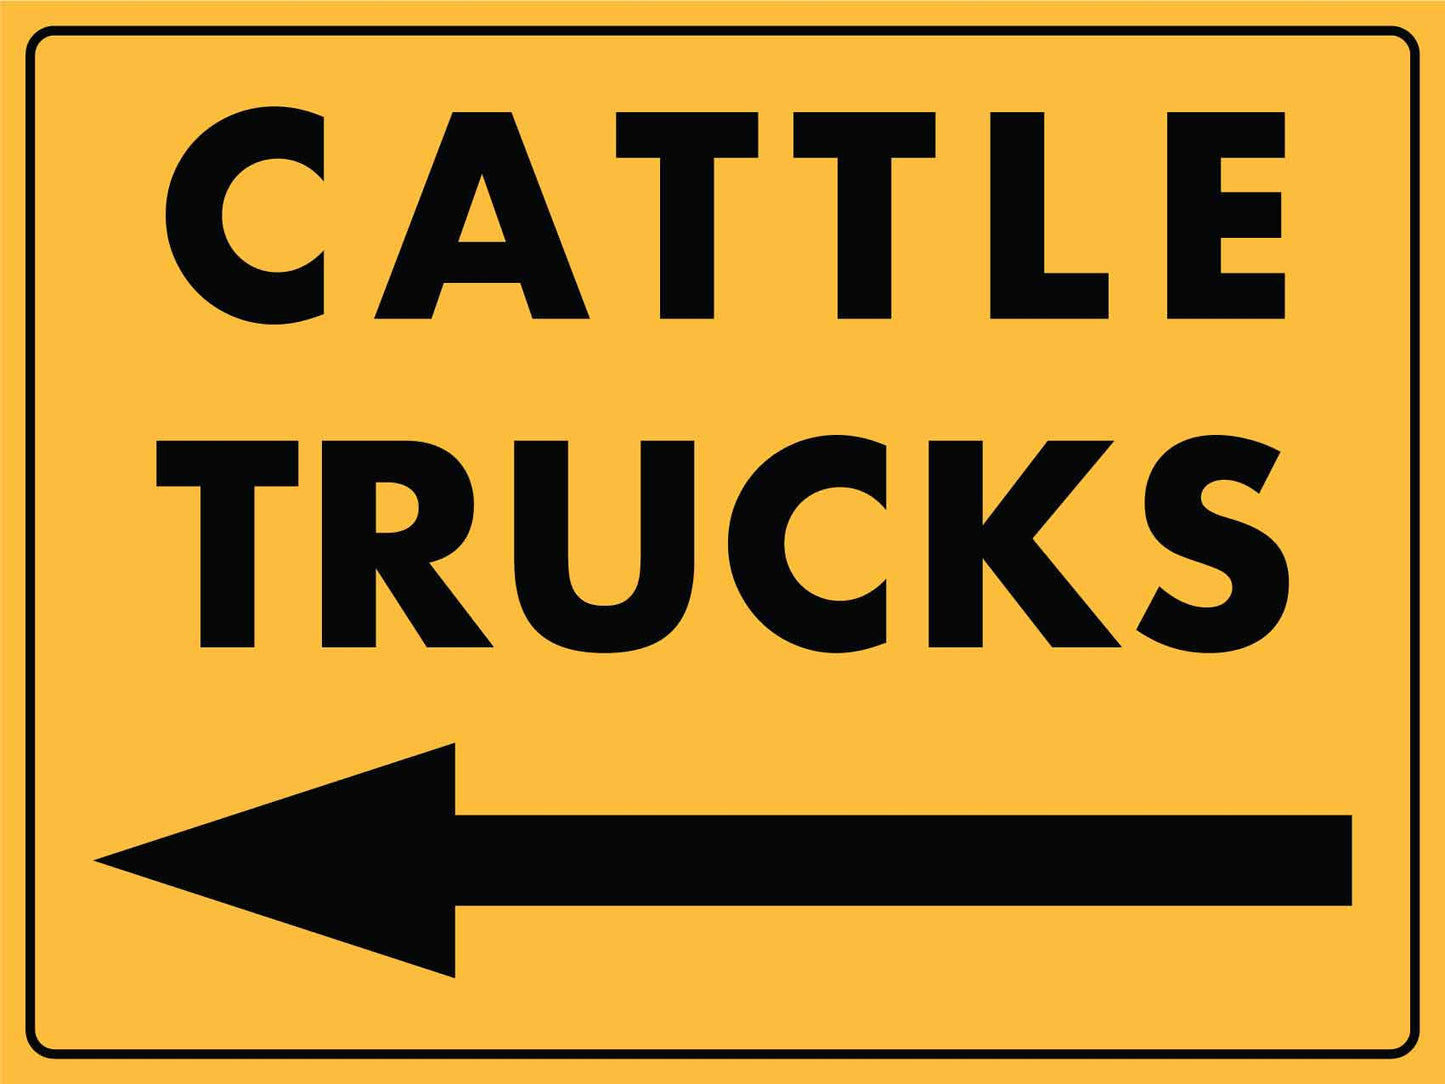 Cattle Trucks (Arrow Left) Sign